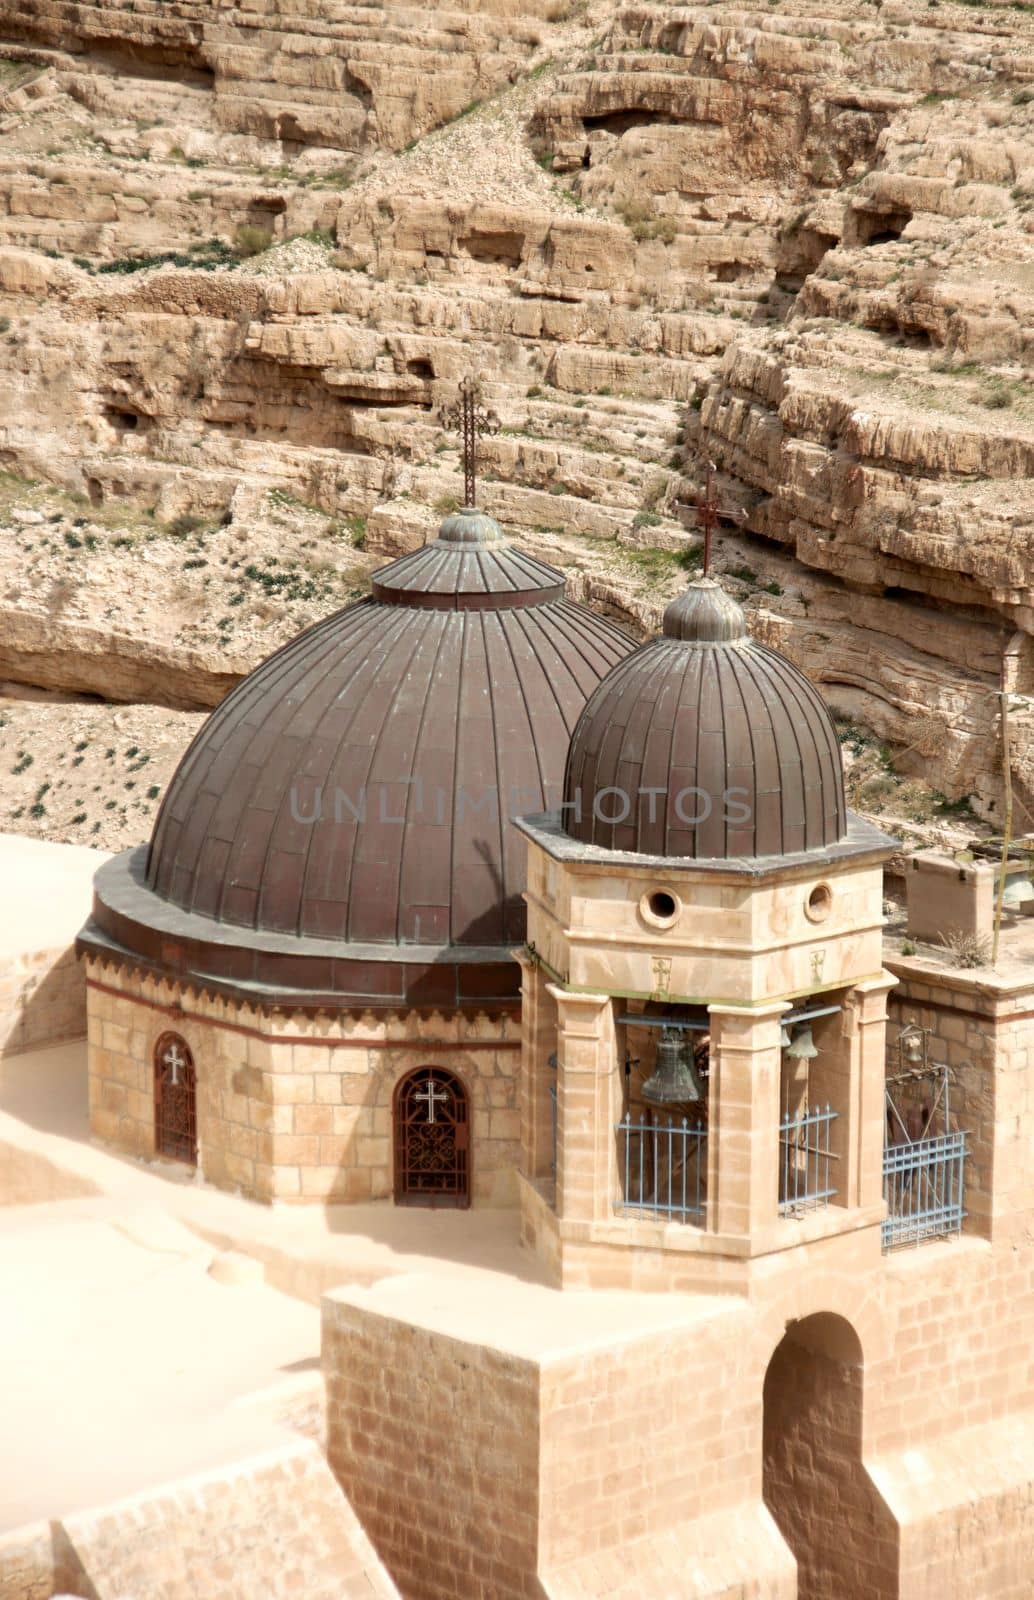 marsaba orthodox monastery in judean desert - israel tourism